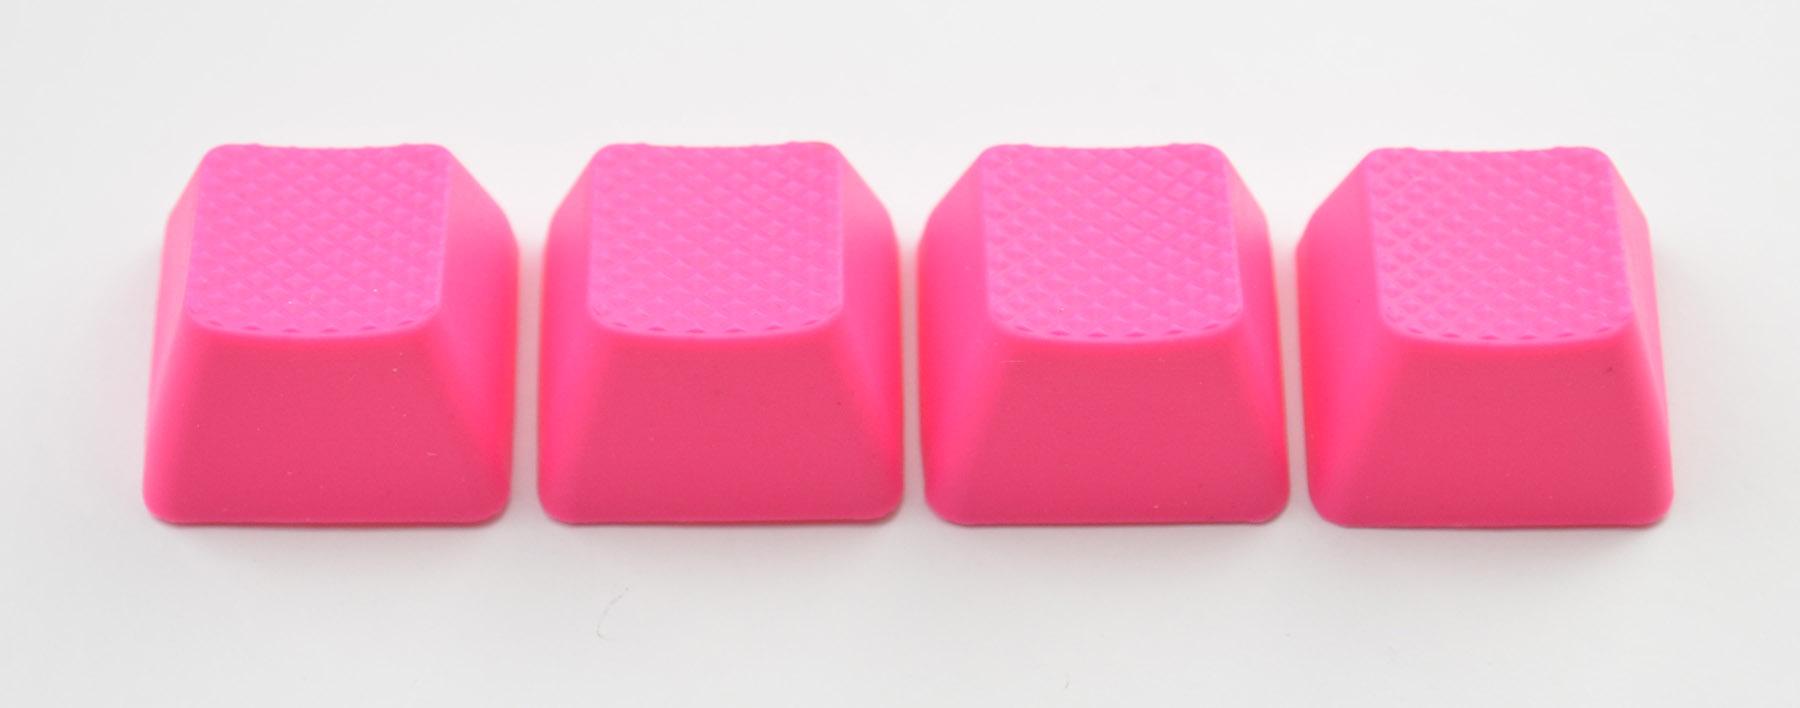 Tai-Hao 4 Key TPR Blank Rubber Keycap Set Neon Pink Row 0 MKWI85AHY3 |38495|